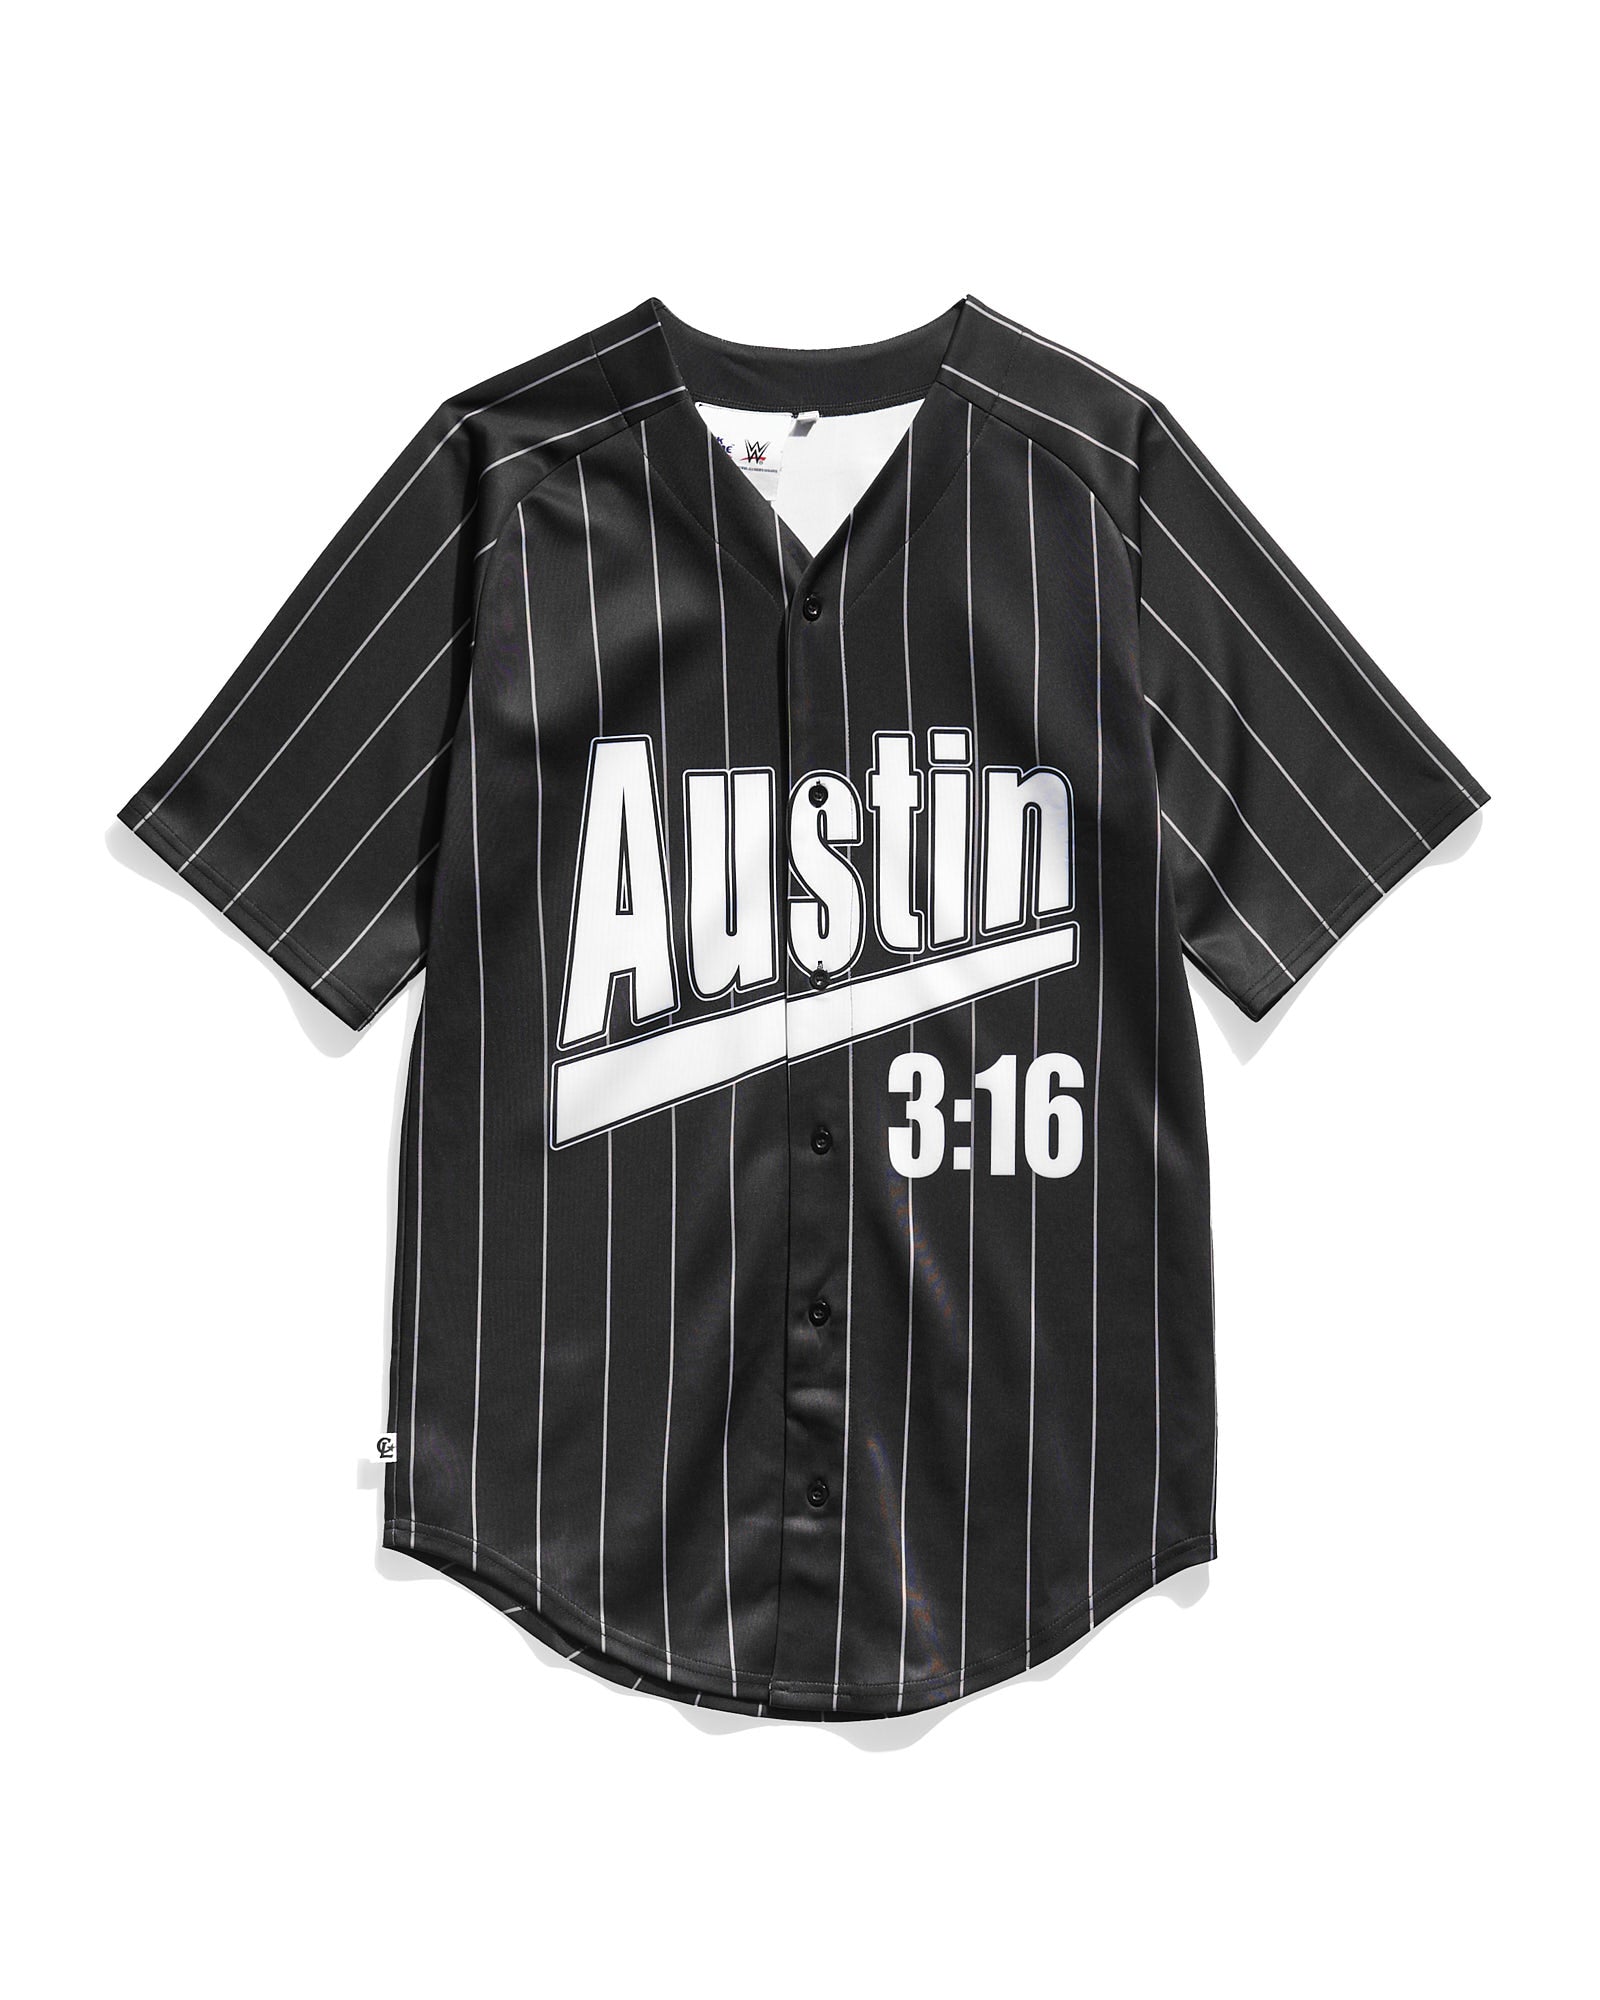 Stone Cold Steve Austin 3:16 Black Baseball Jersey